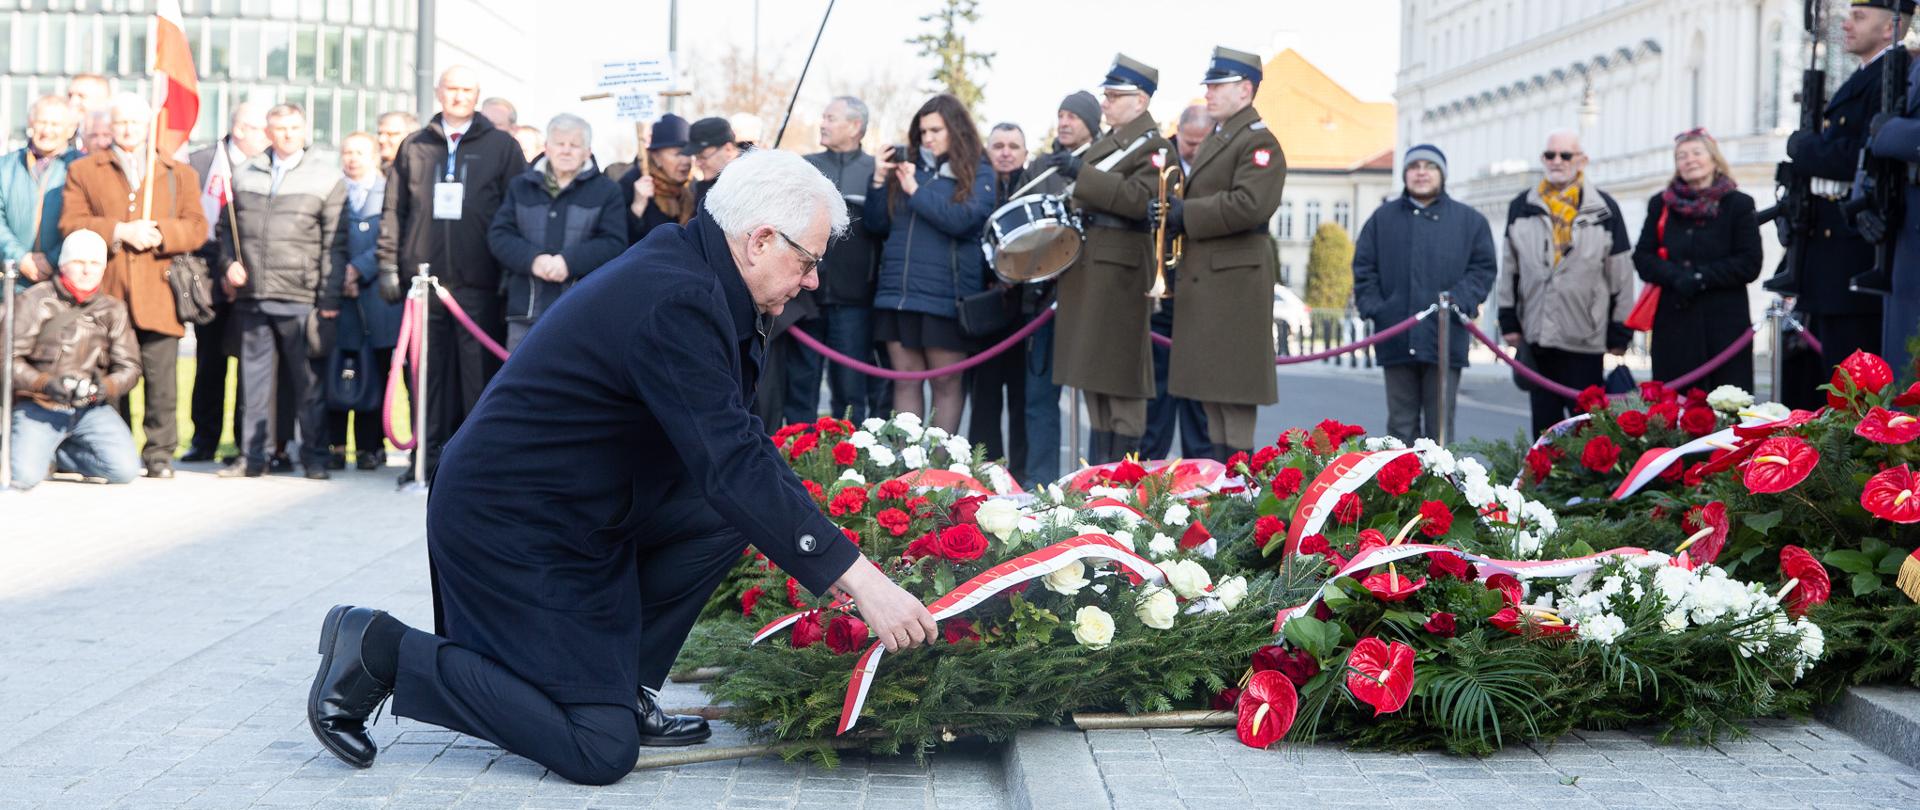 Ninth anniversary of the Smolensk plane crash